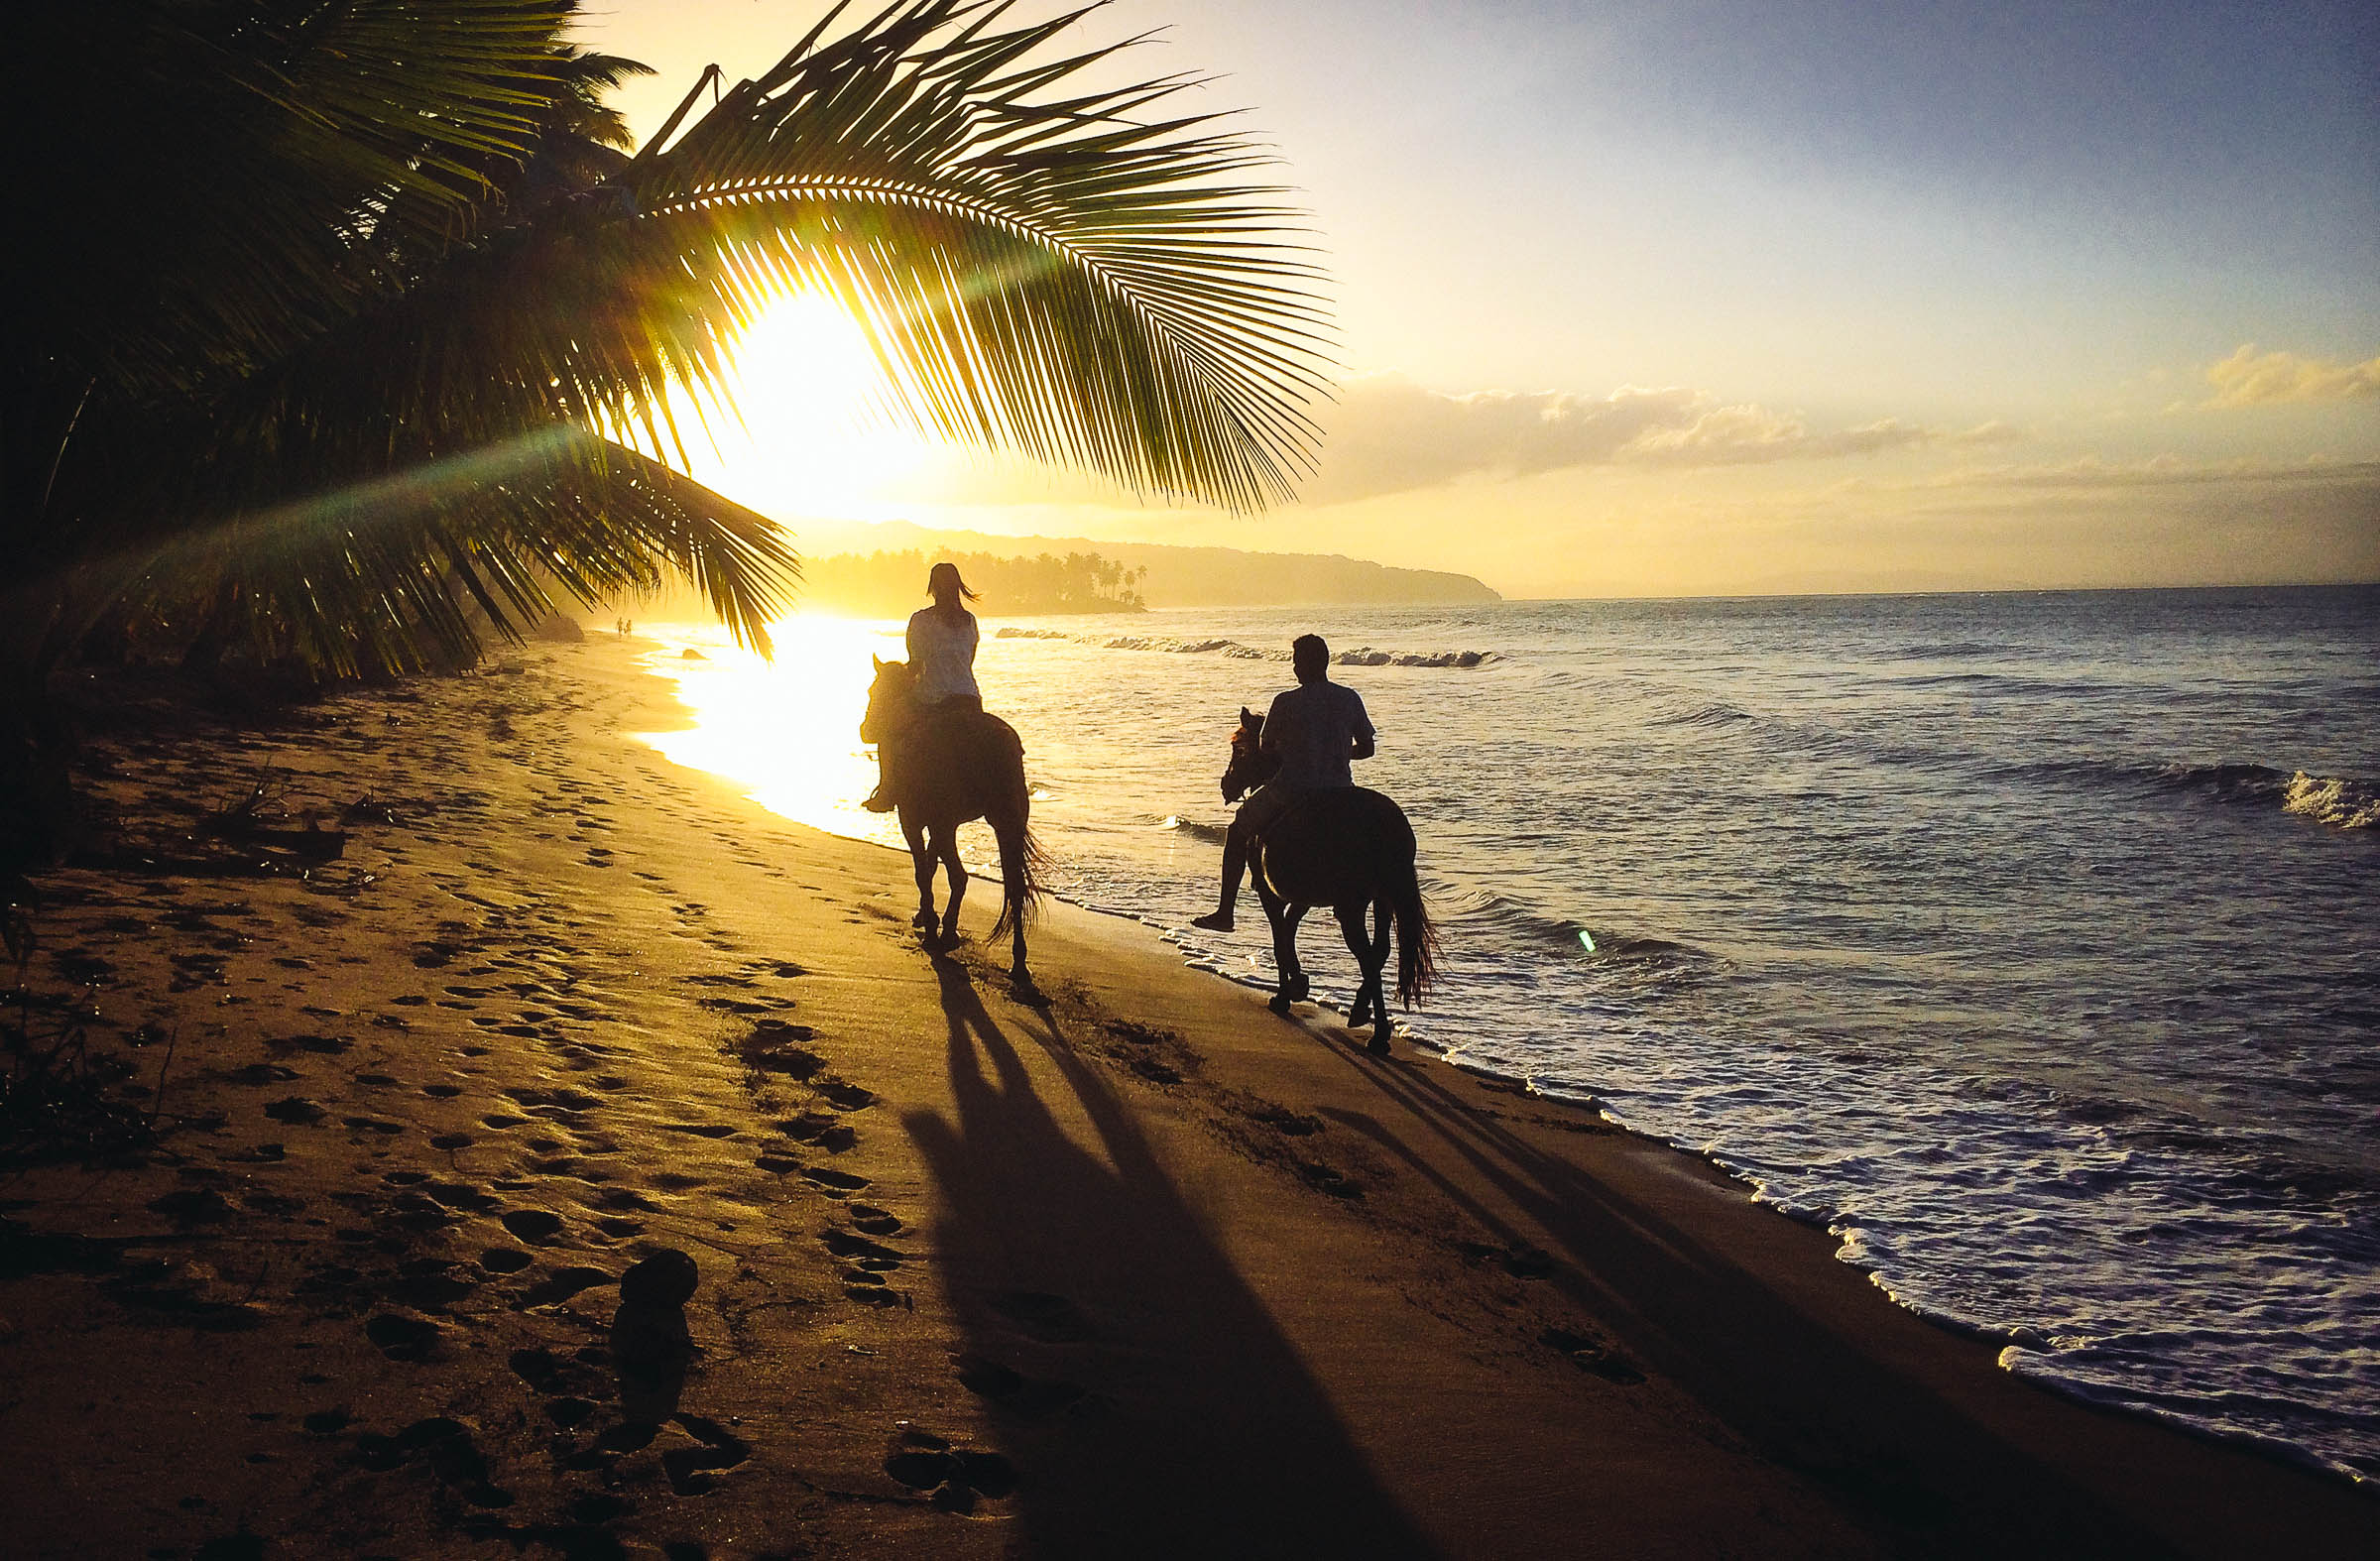 Horseback riding at sunset on the beach near Las Terrenas by Patrick Bennett